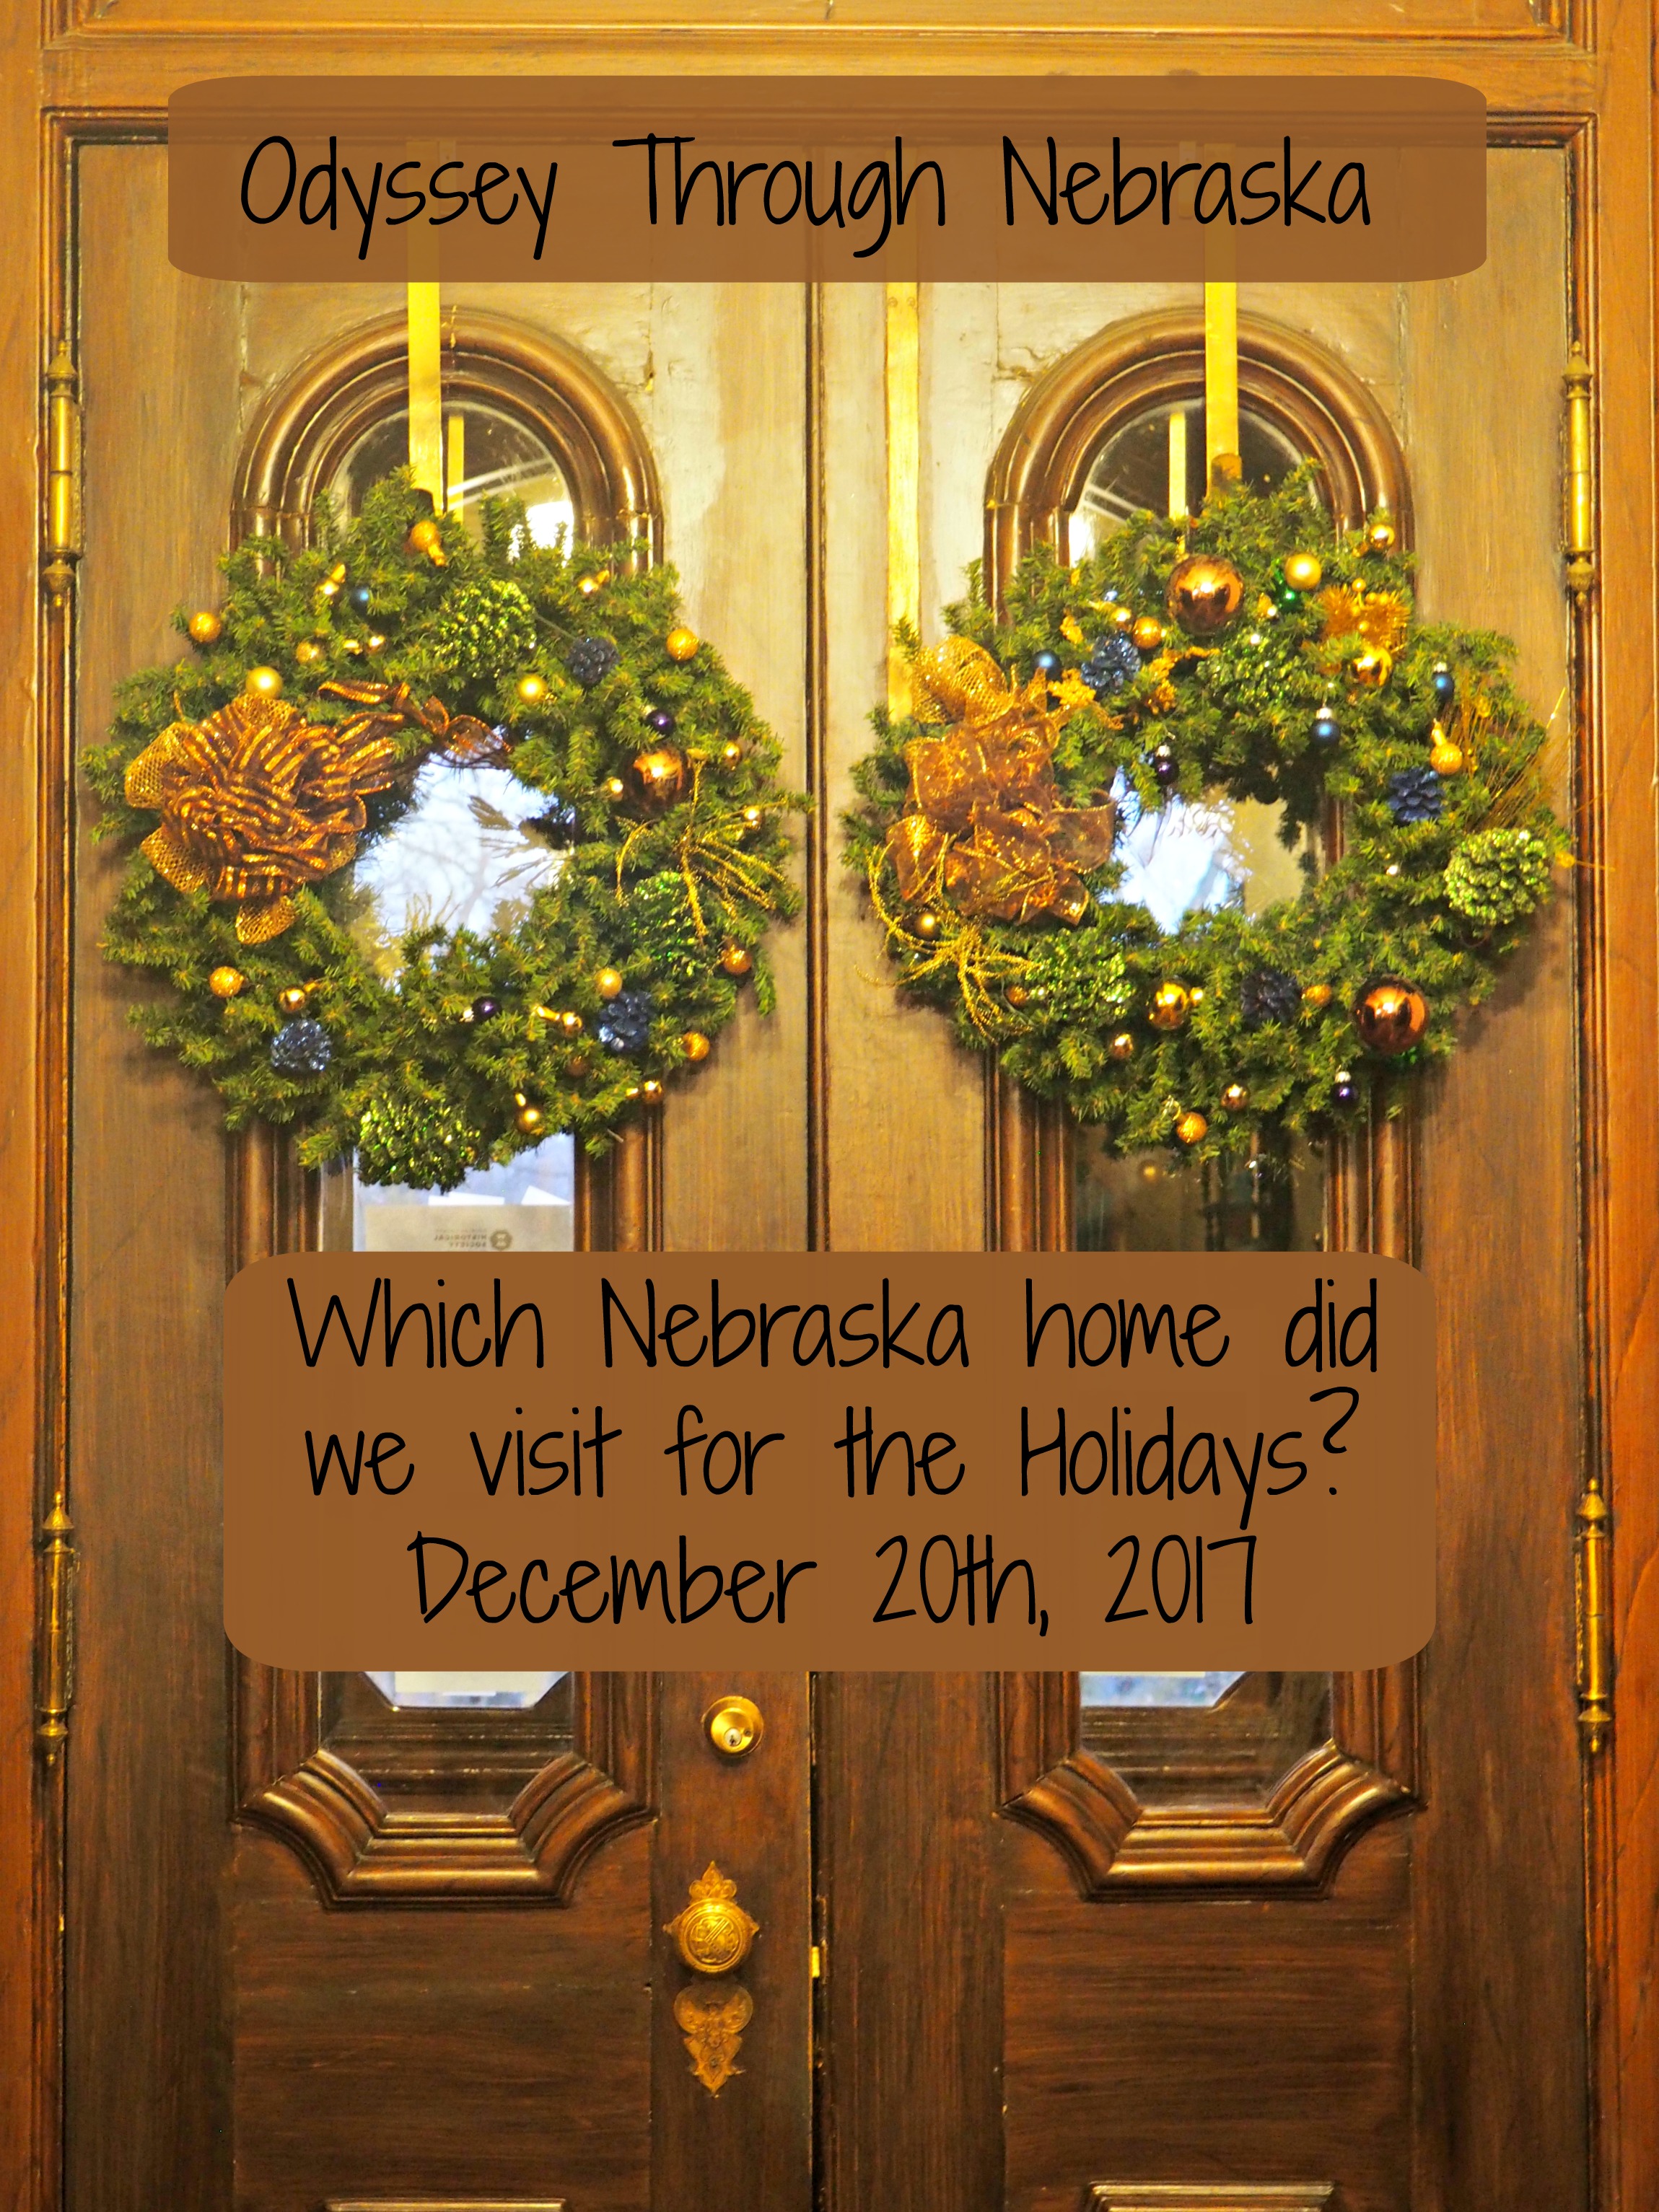 12-20-17 Nebraska Home for the Holidays